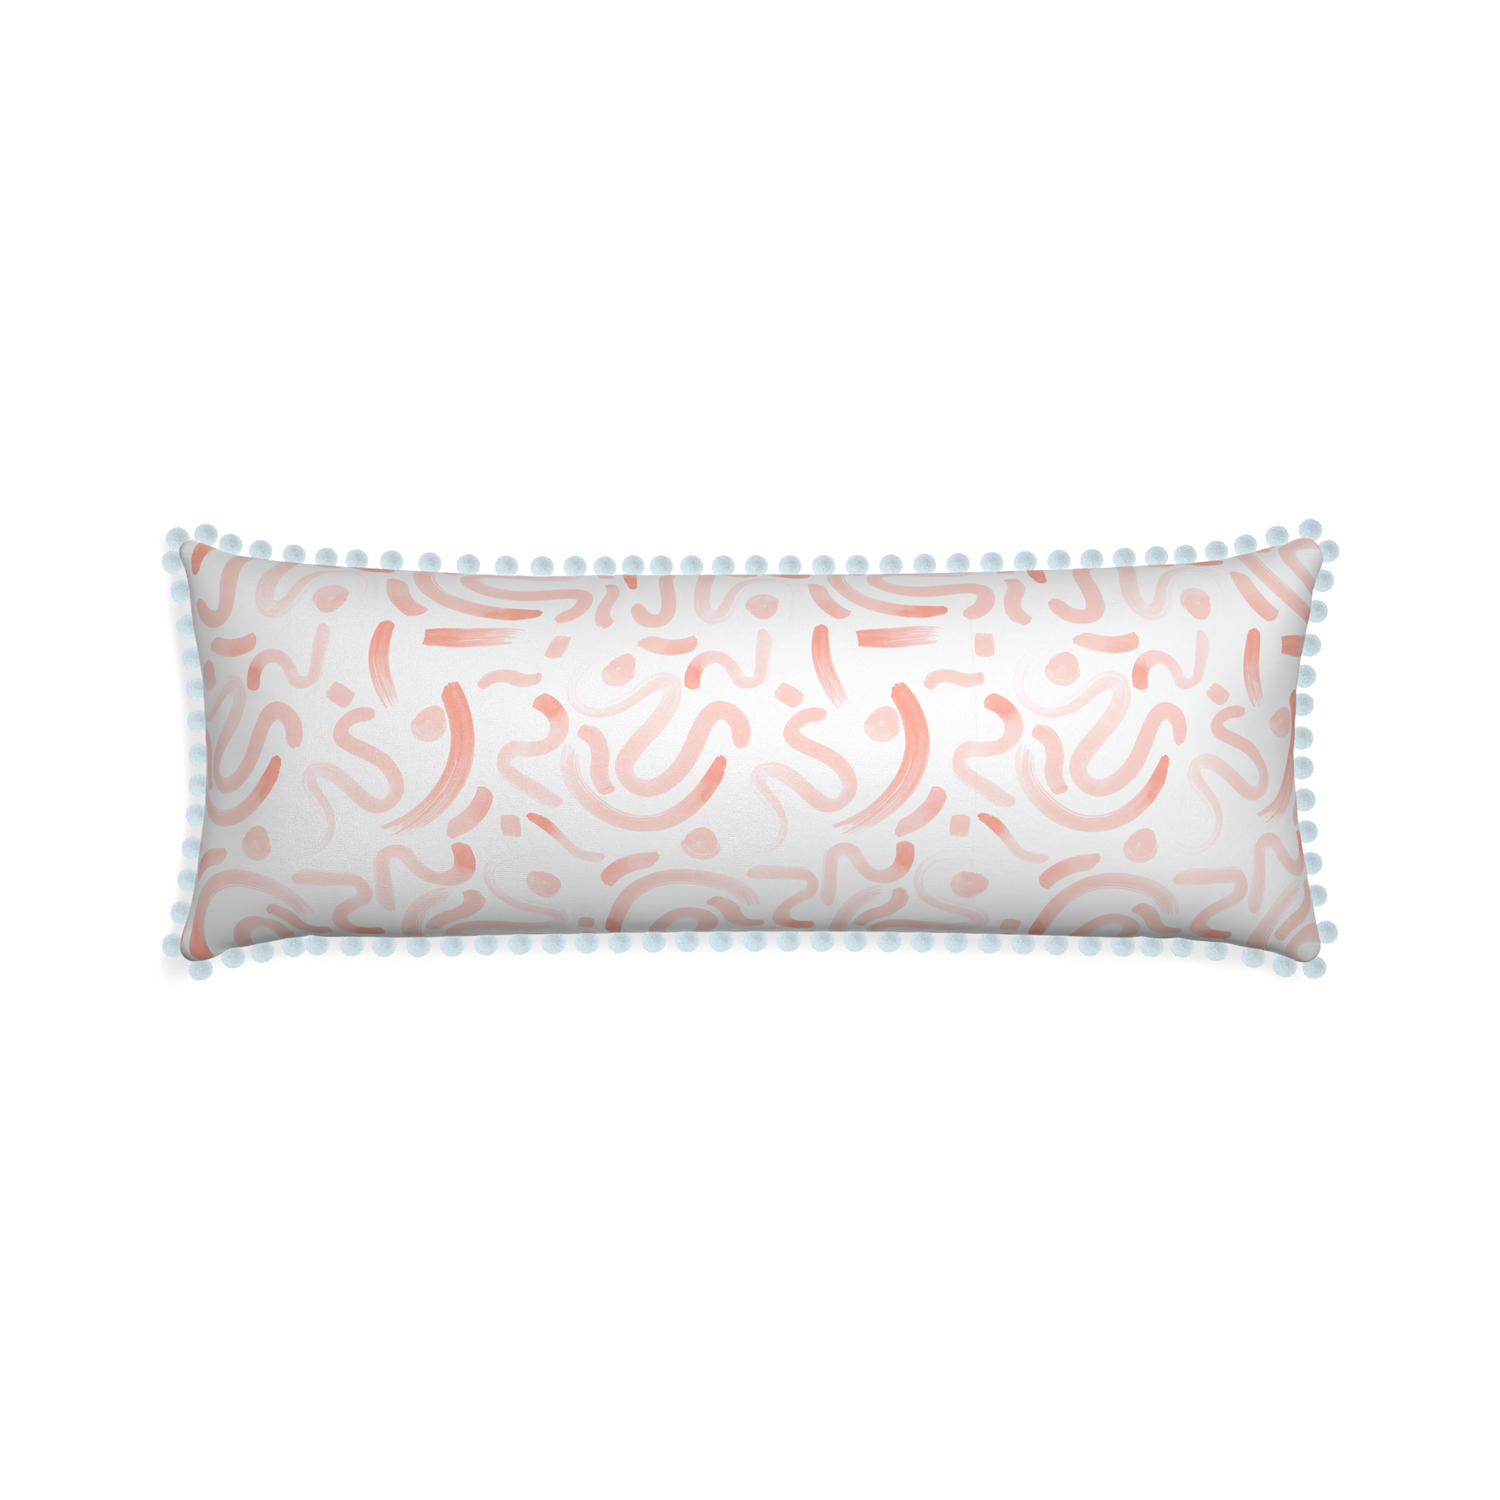 Xl-lumbar hockney pink custom pillow with powder pom pom on white background